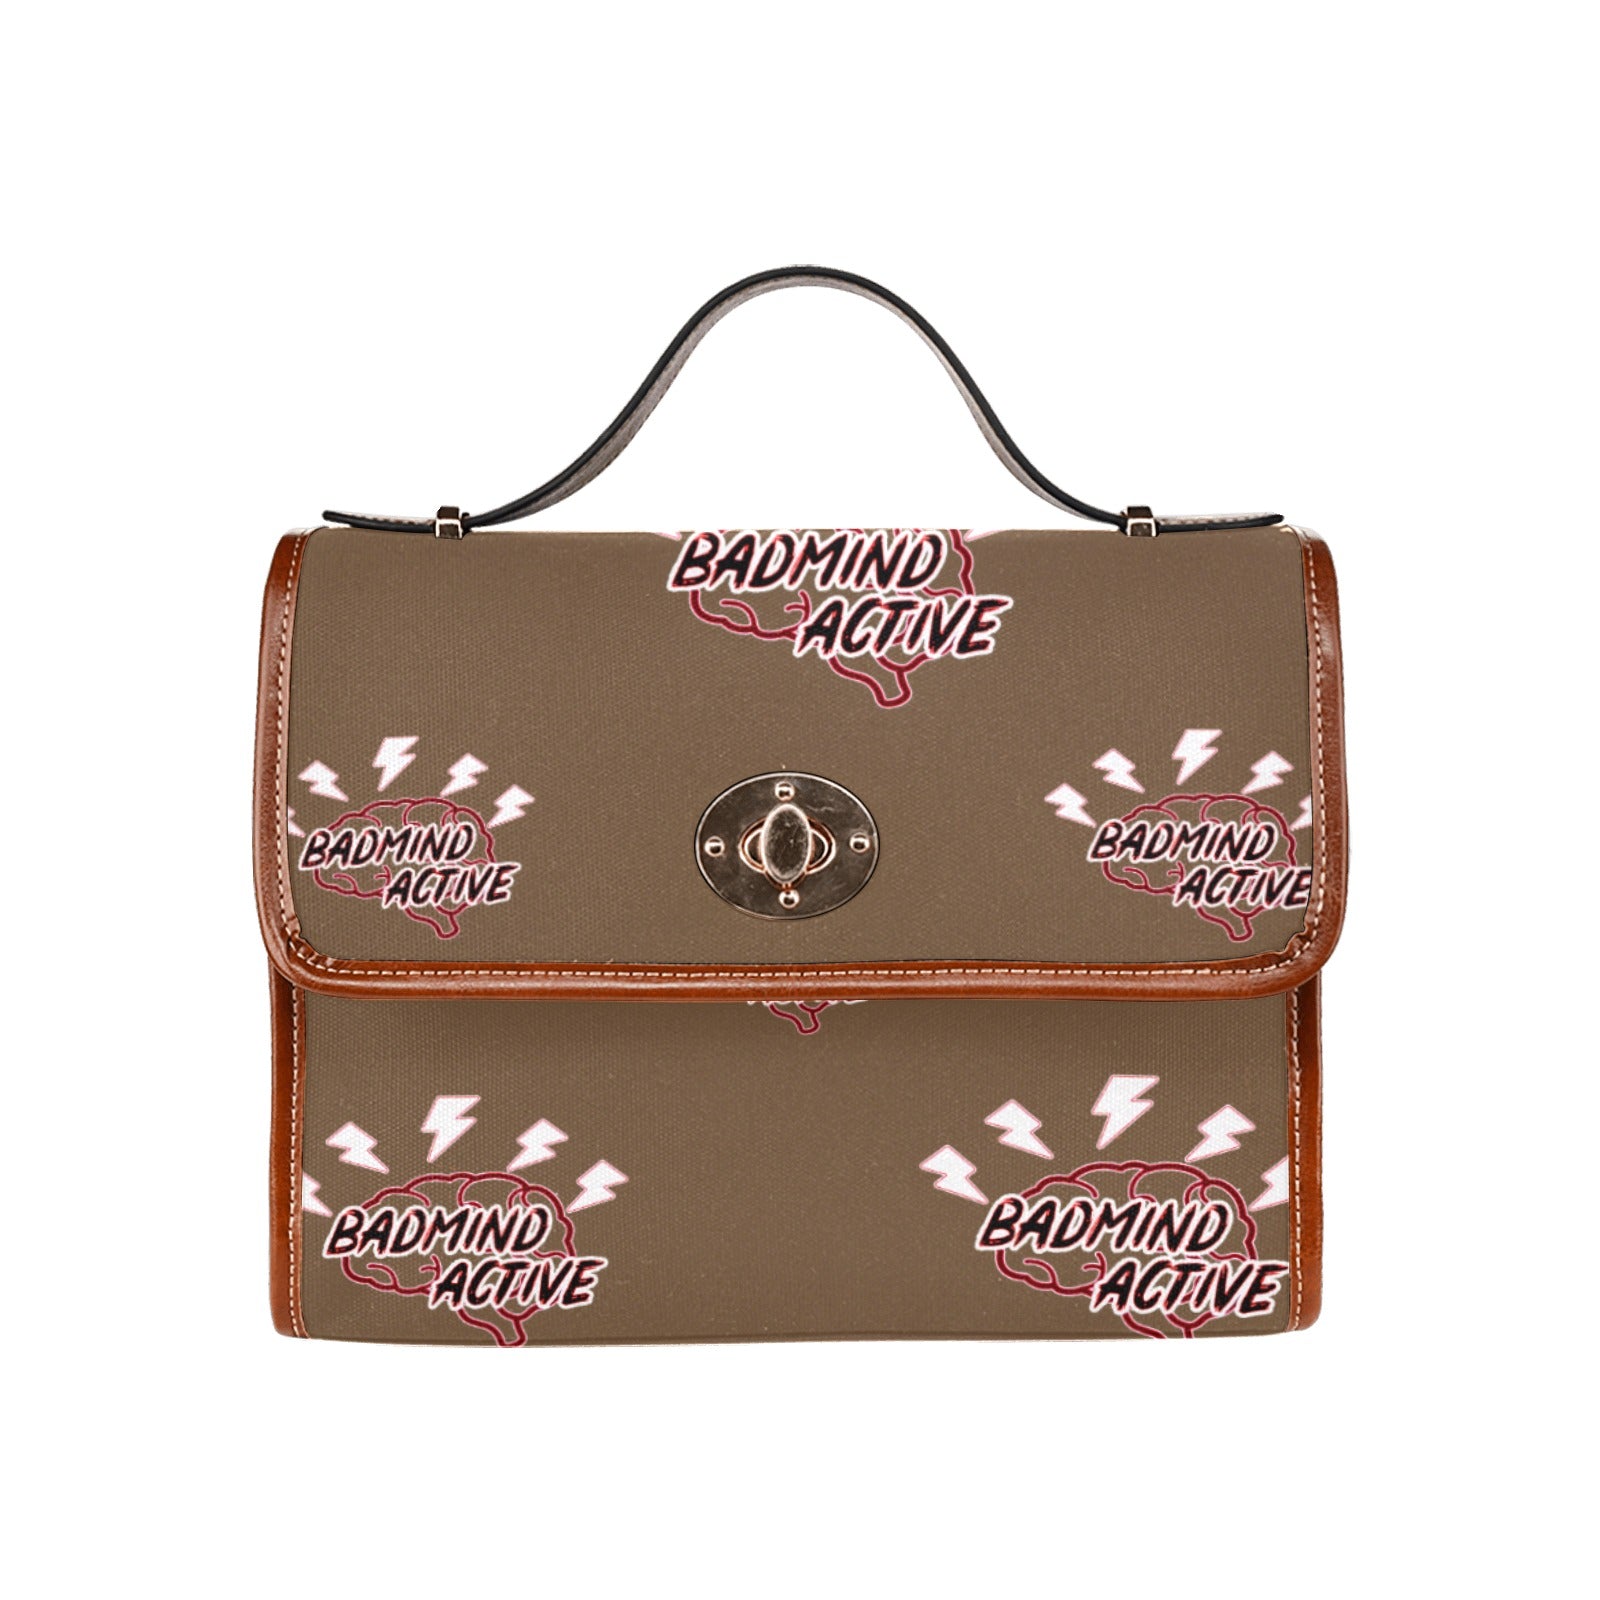 fz mind handbag one size / fz - mind bag-brown all over print waterproof canvas bag(model1641)(brown strap)